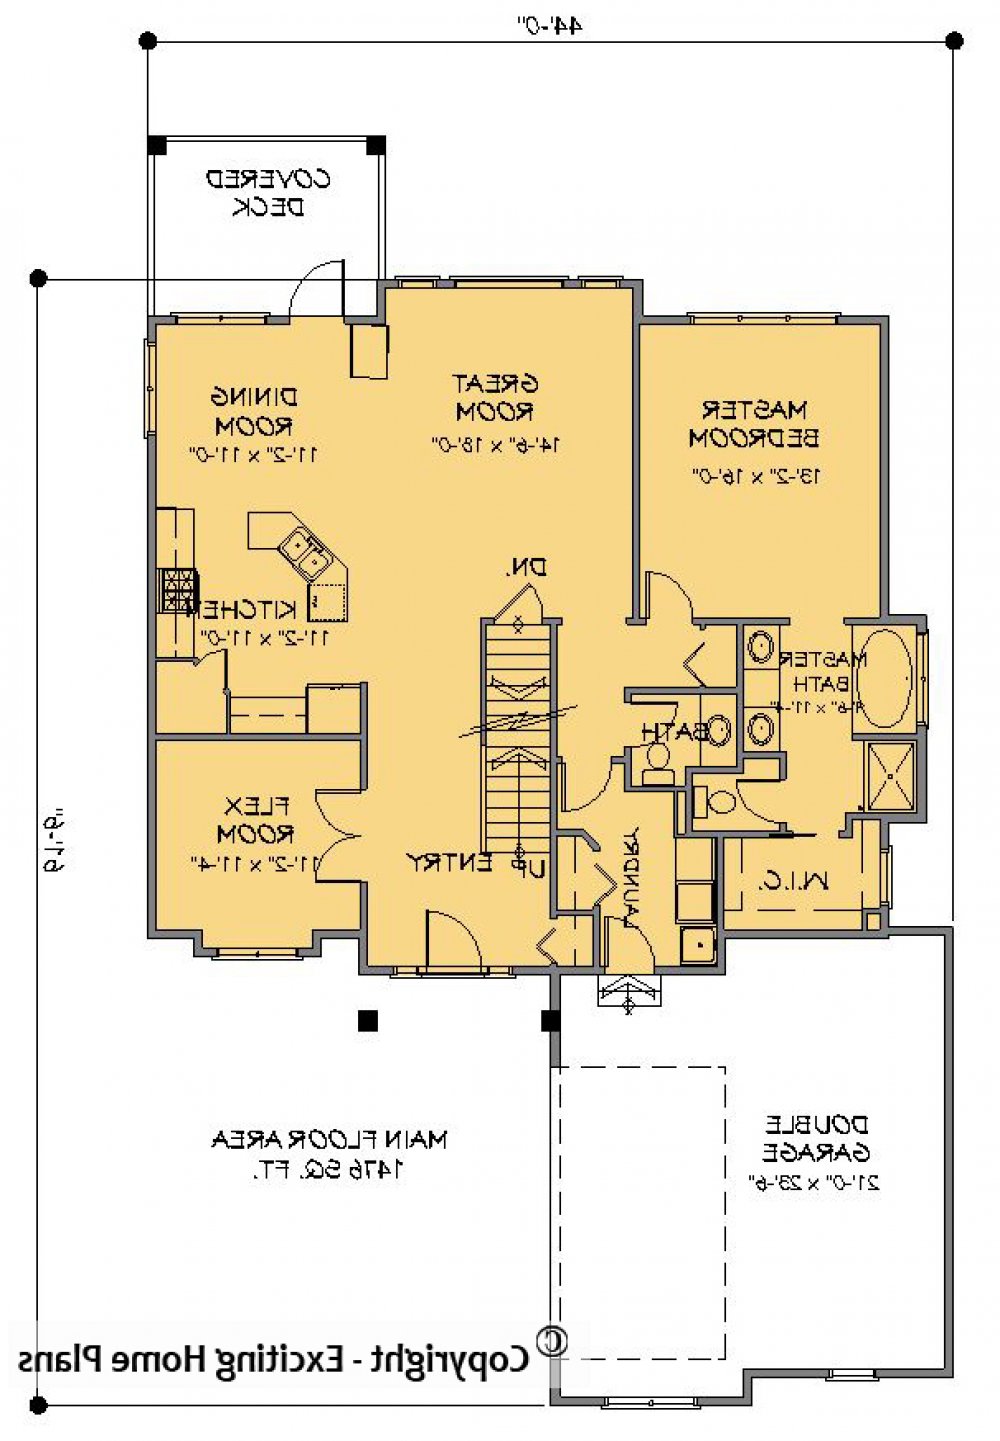 House Plan E1196-10 Main Floor Plan REVERSE